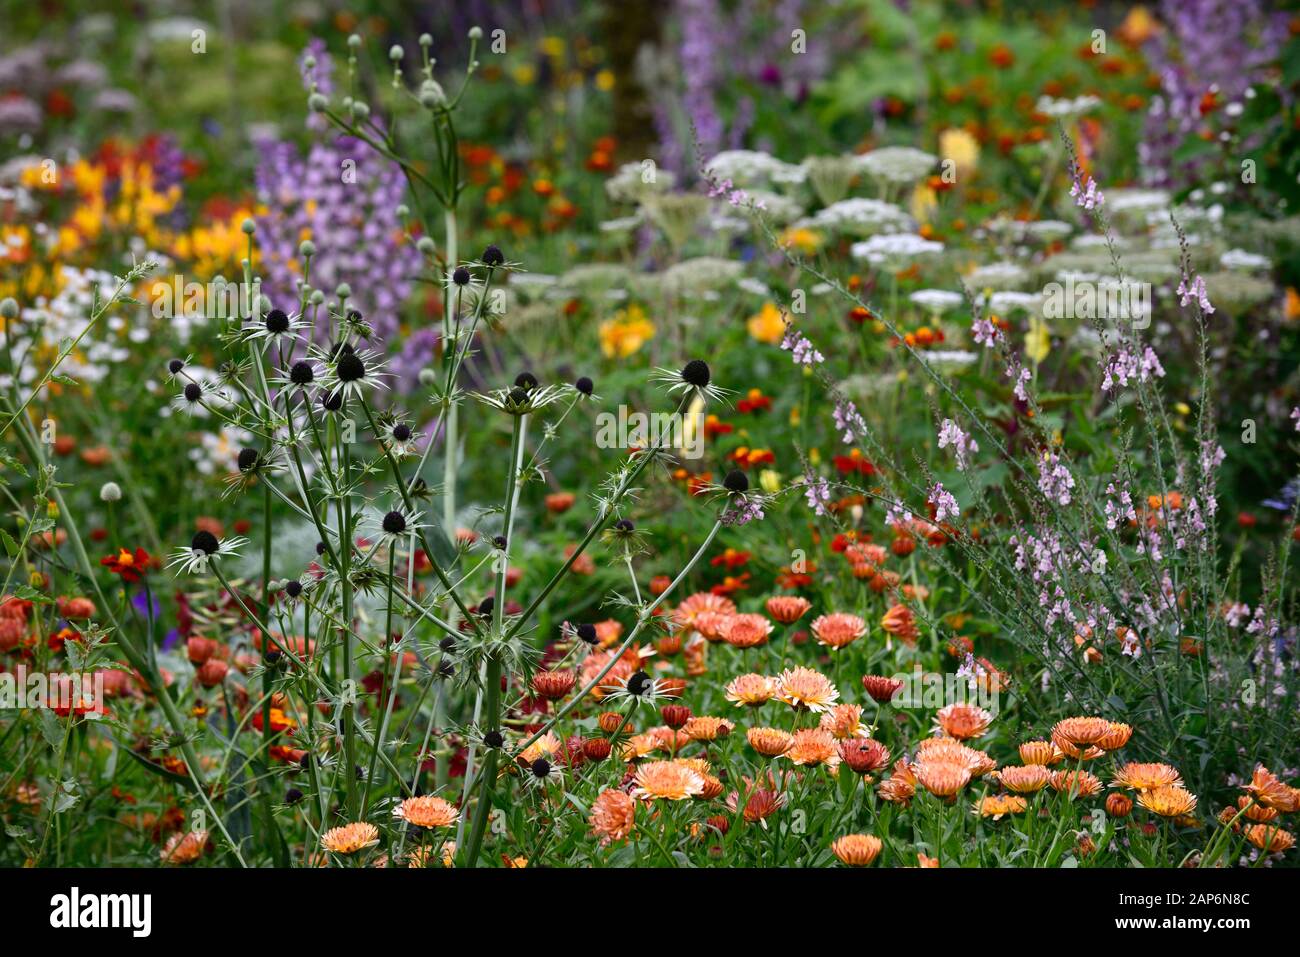 eryngium guateralense,tagetes cinabar,alstroemeria,Calendula Zeolights,Salvia sclarea,,fiori,fioritura,confine misto, Foto Stock